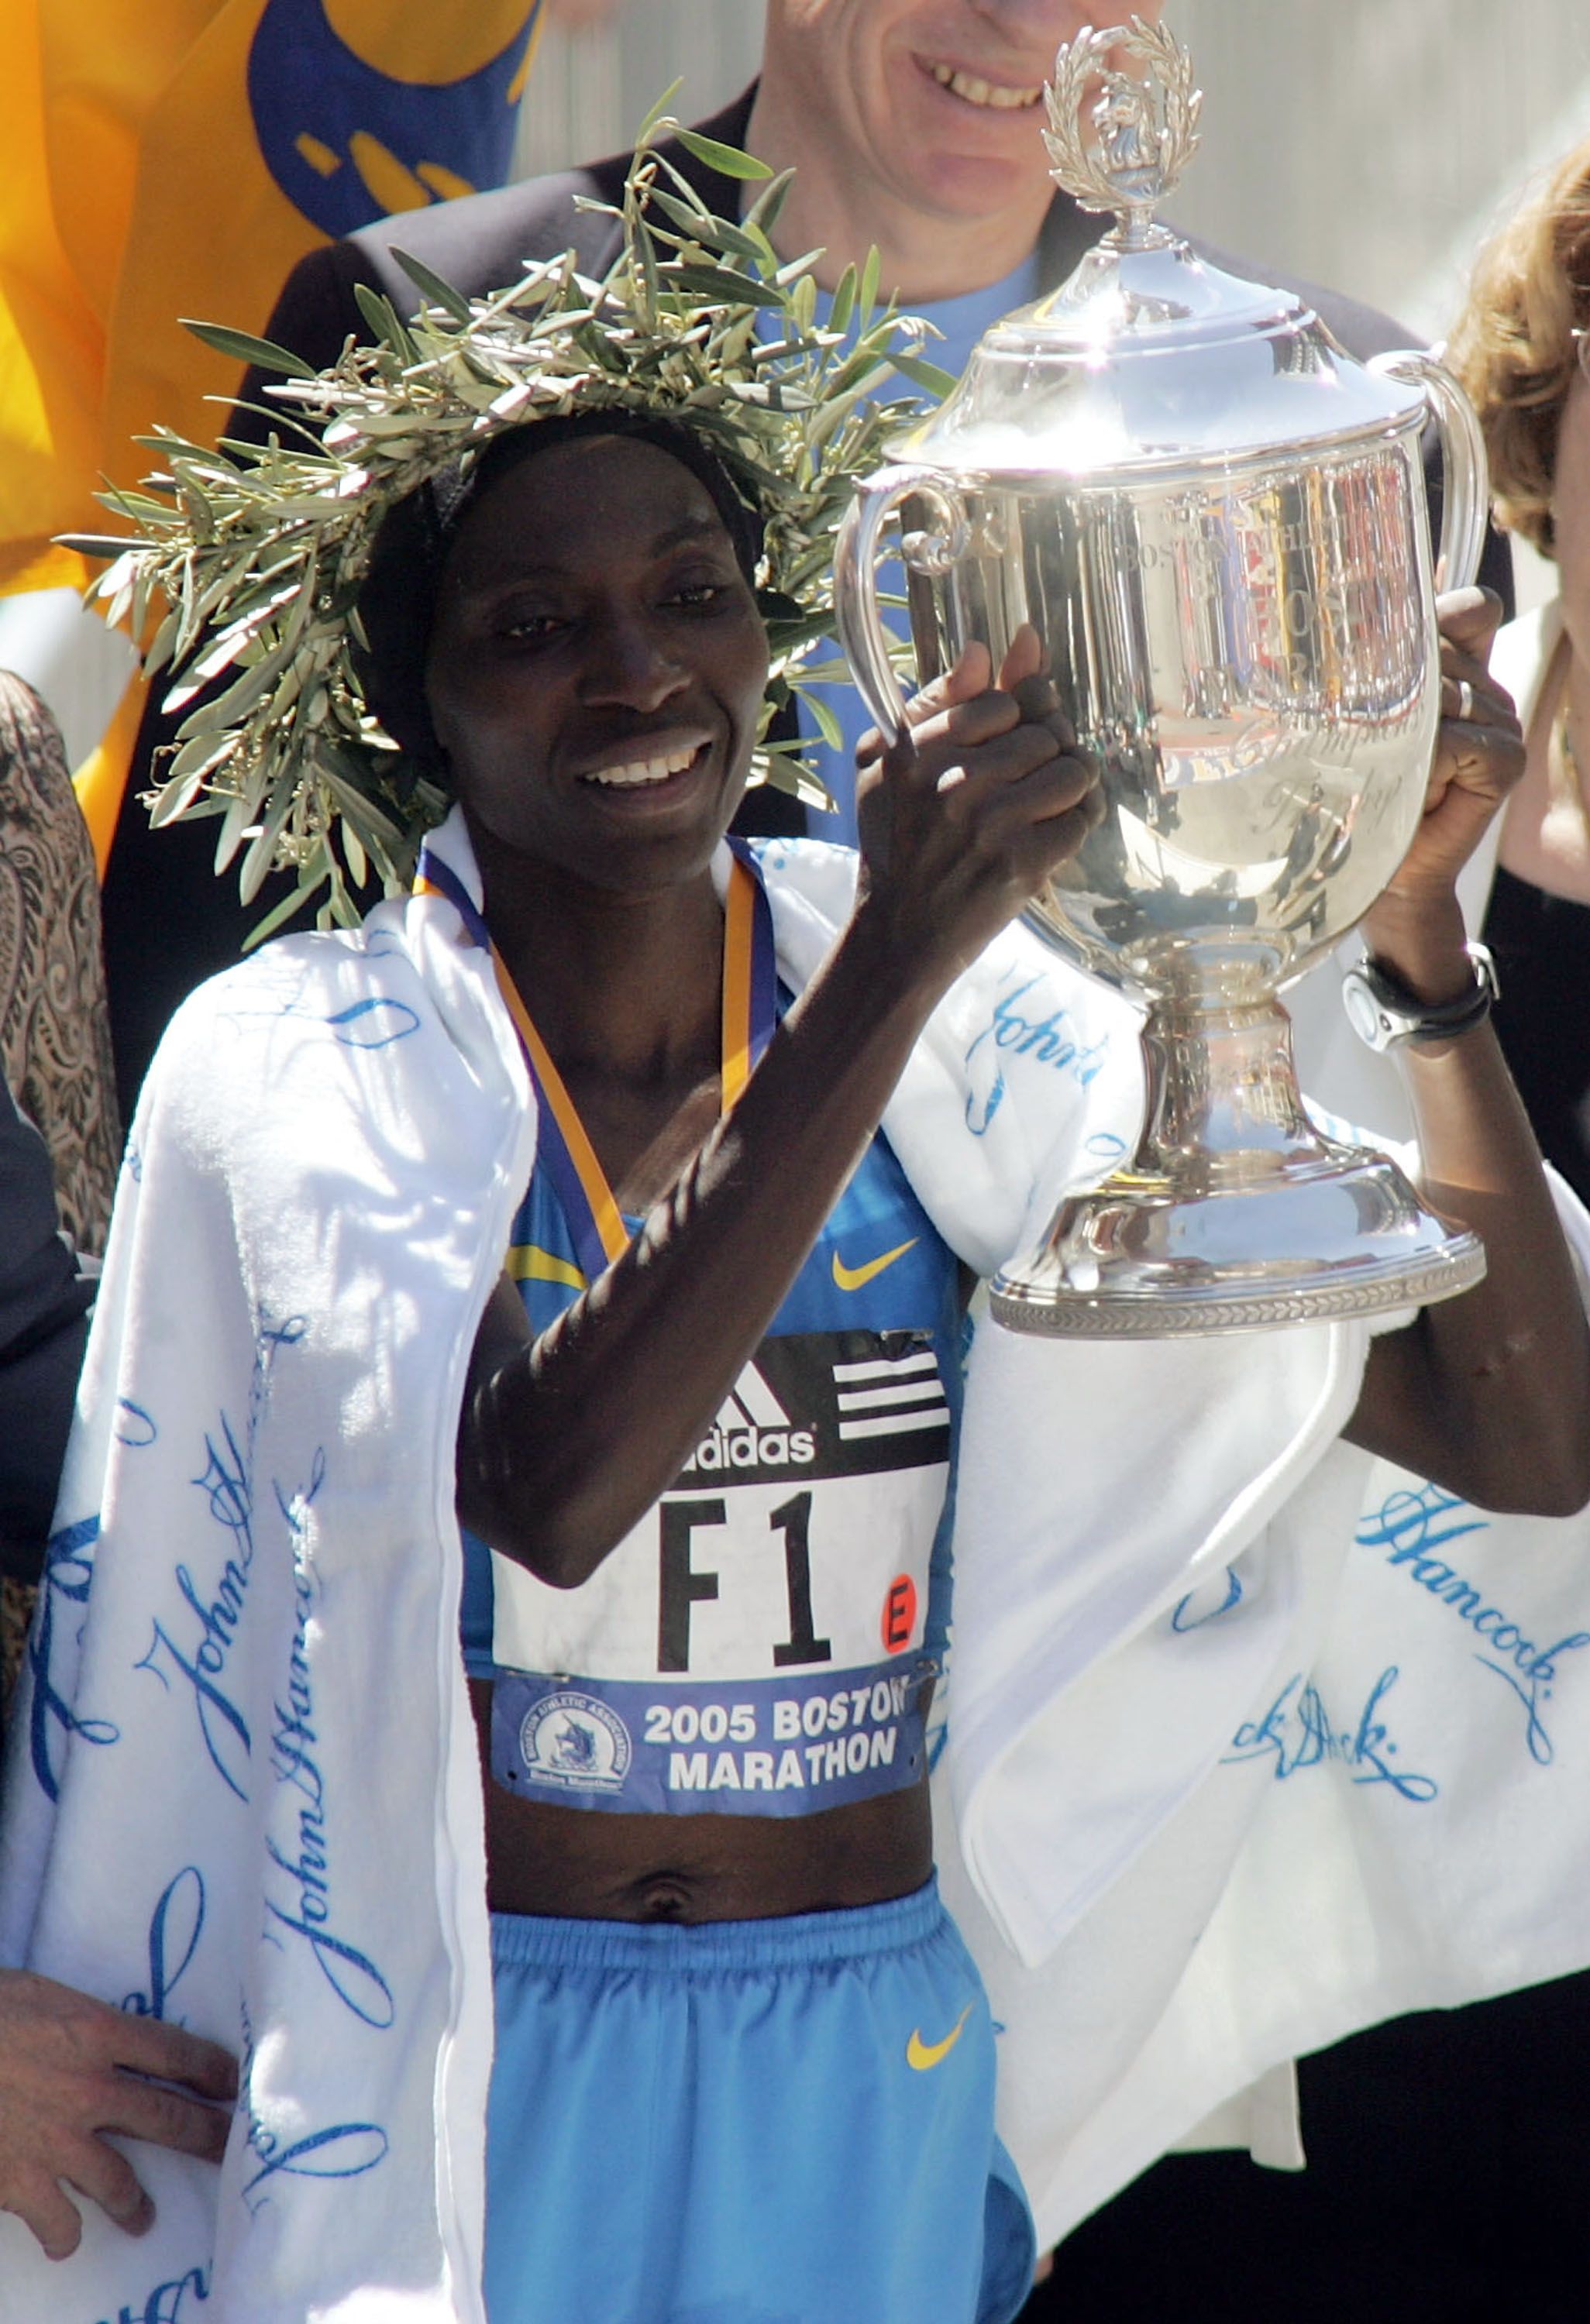 Catherine Ndereba after winning the 2005 Boston Marathon